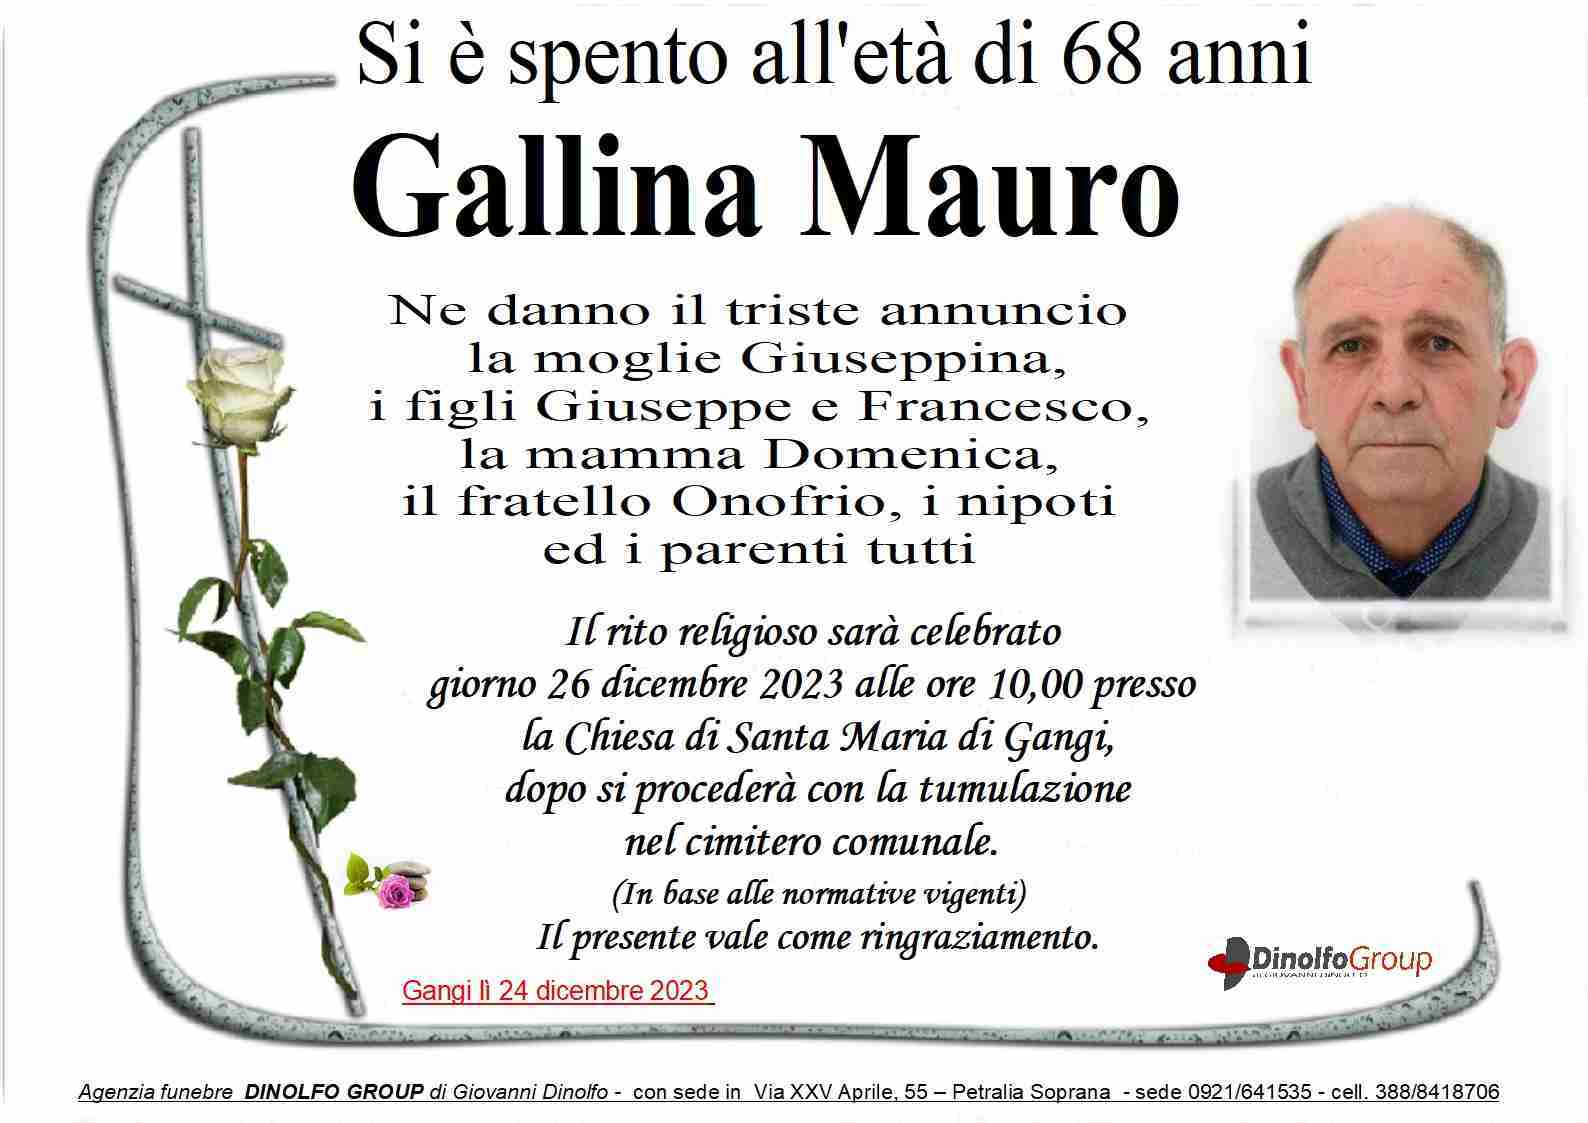 Mauro Gallina